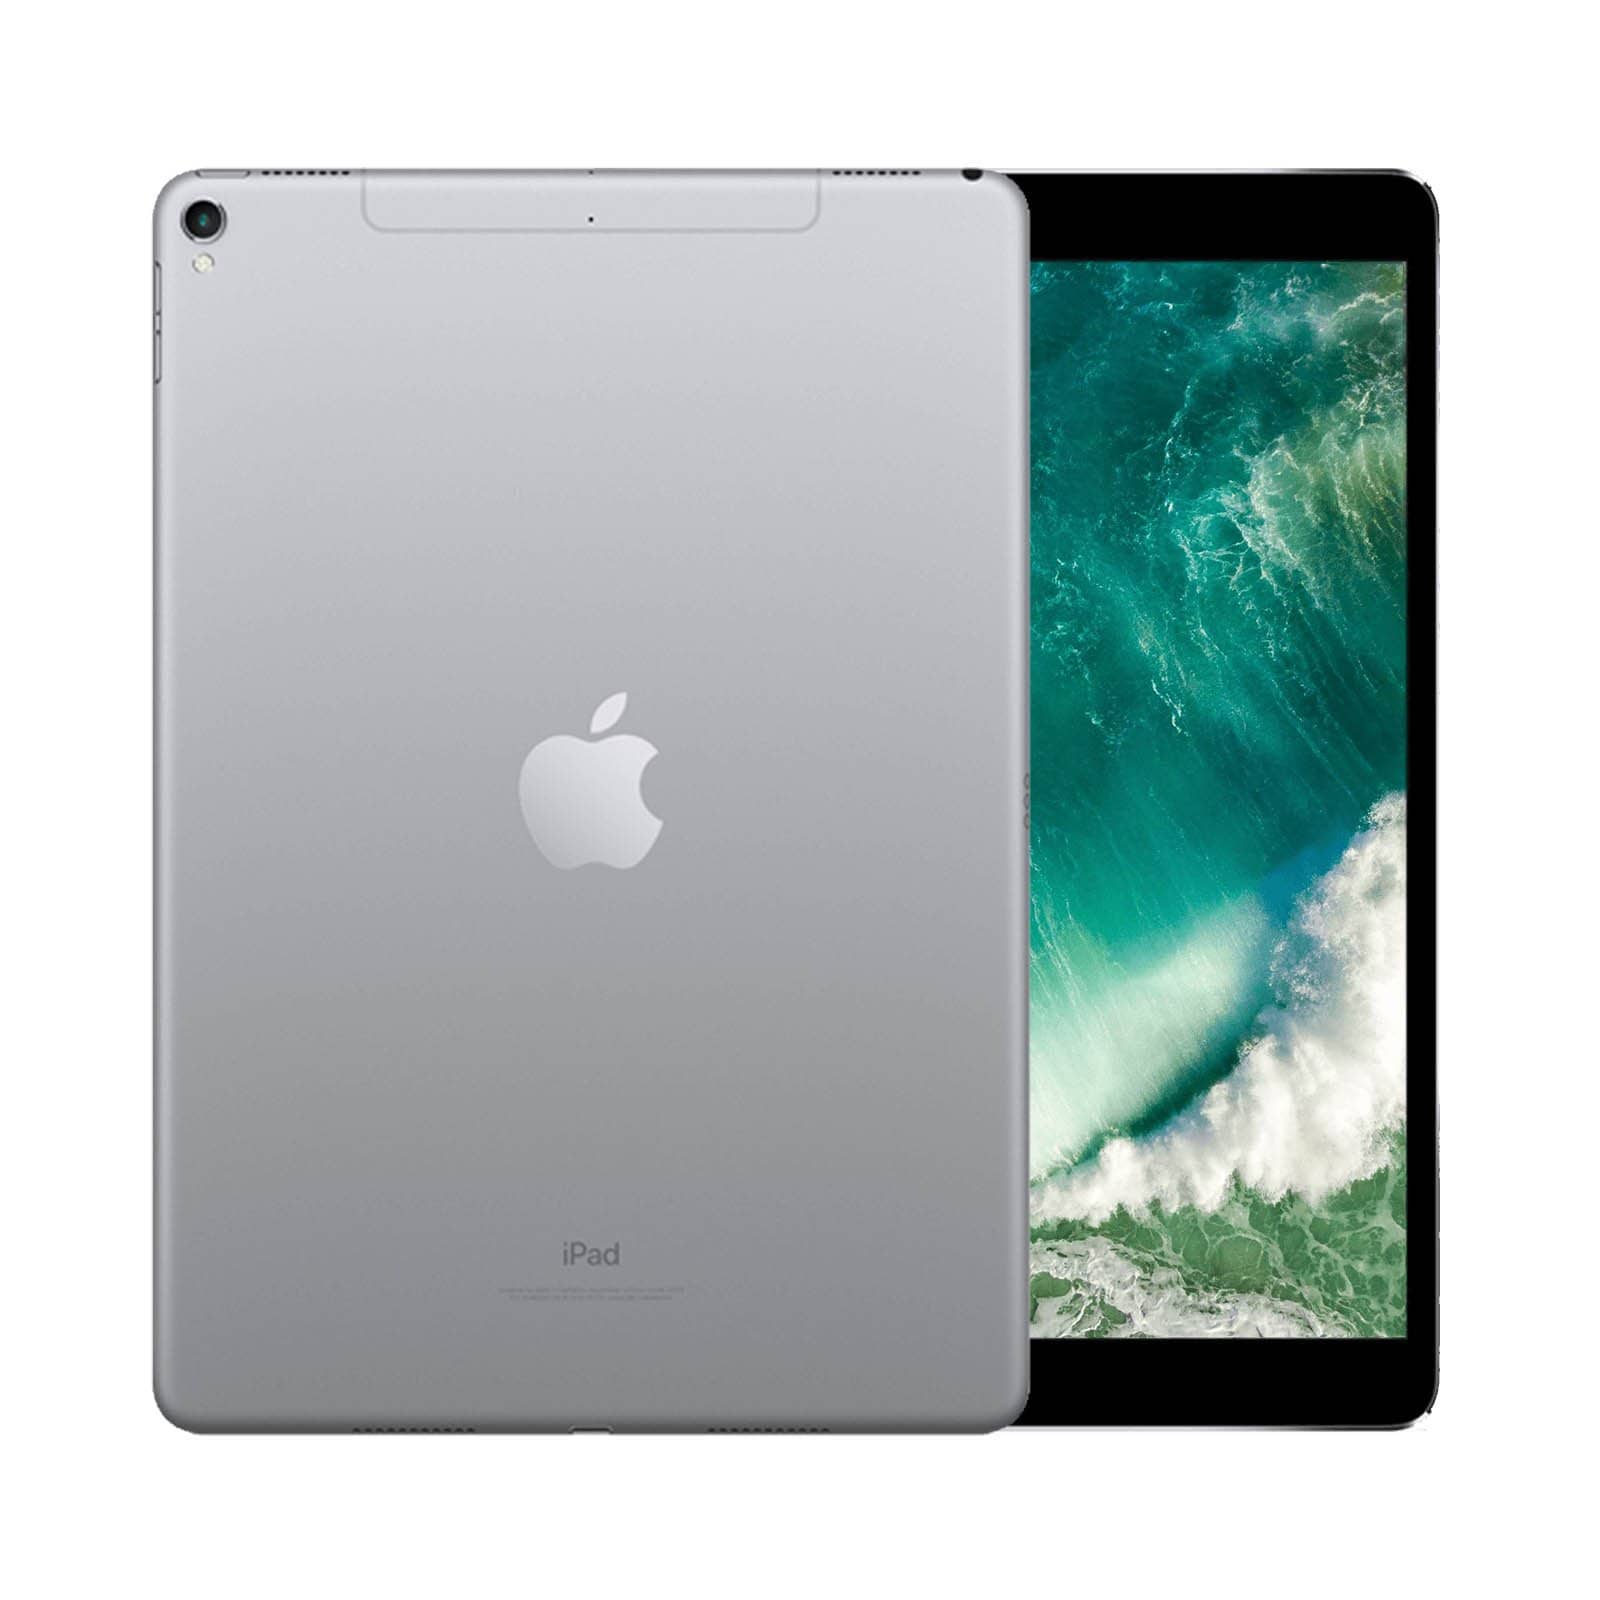 iPad Pro 10.5 Inch 64GB Space Grey Good - Unlocked